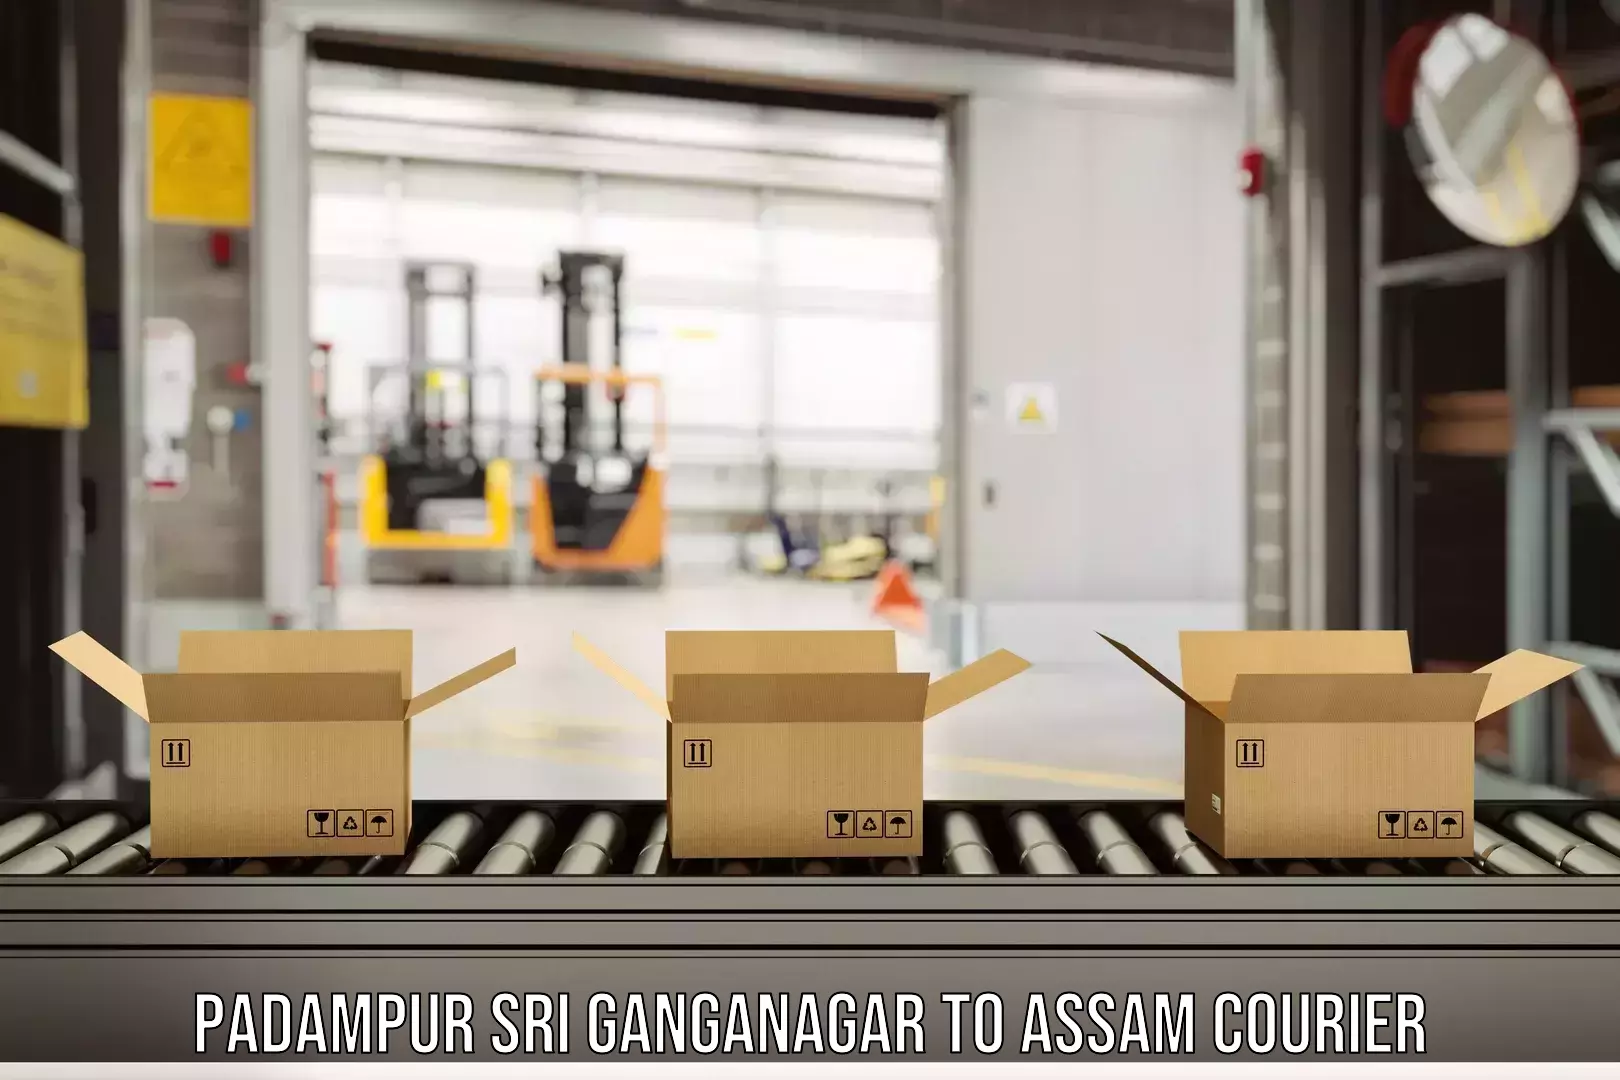 Expedited parcel delivery Padampur Sri Ganganagar to Jagiroad